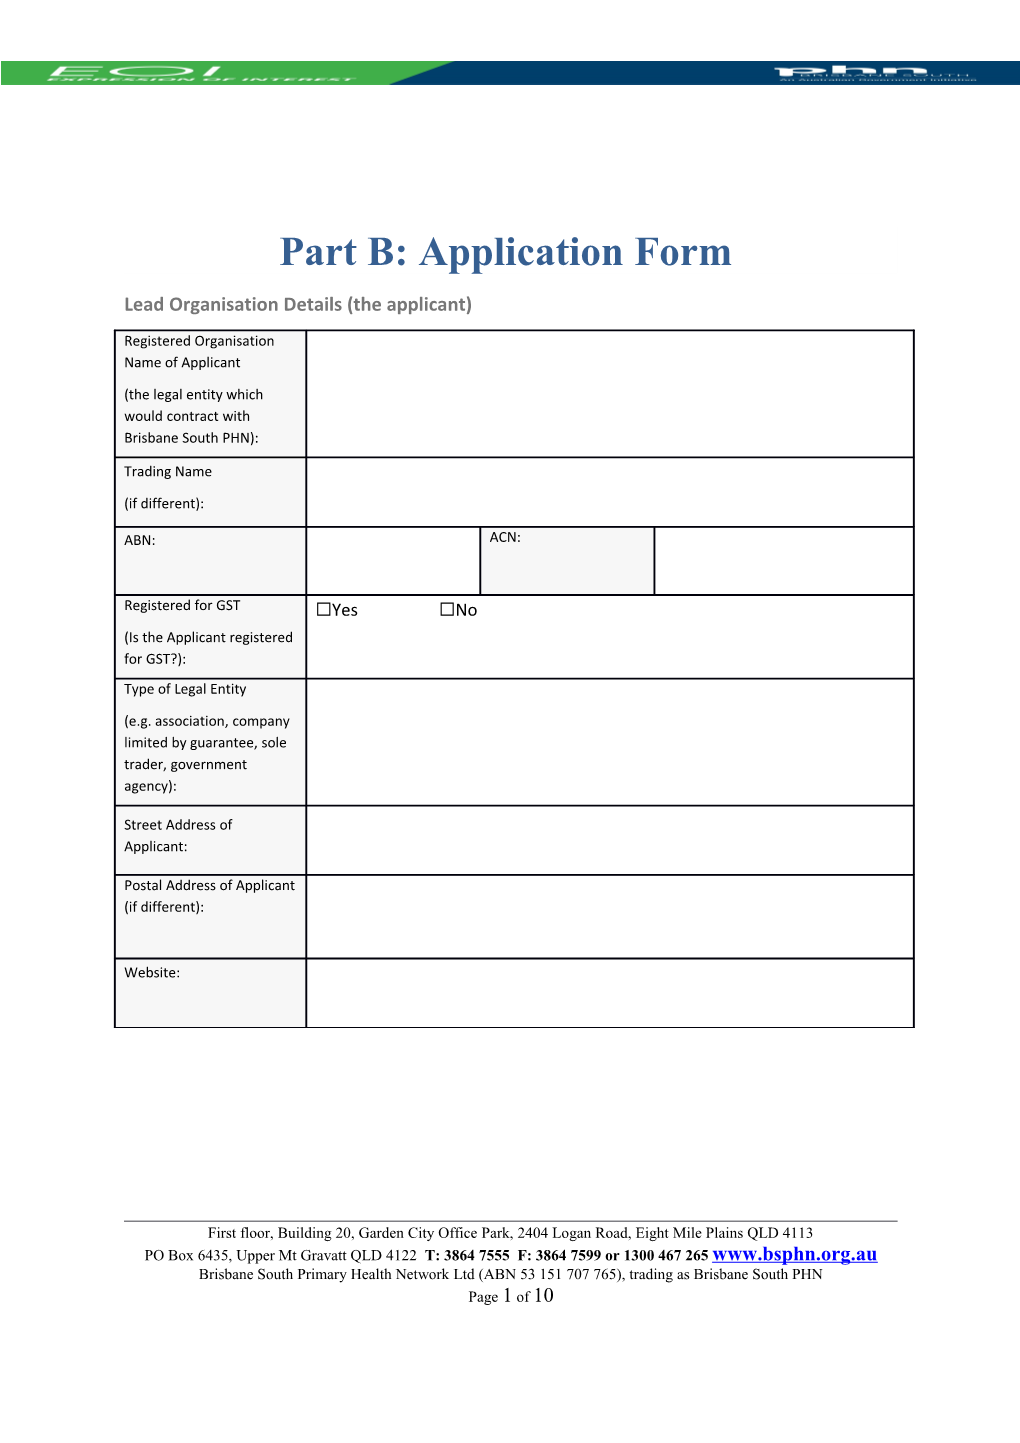 EOI PIR Intake Application Form